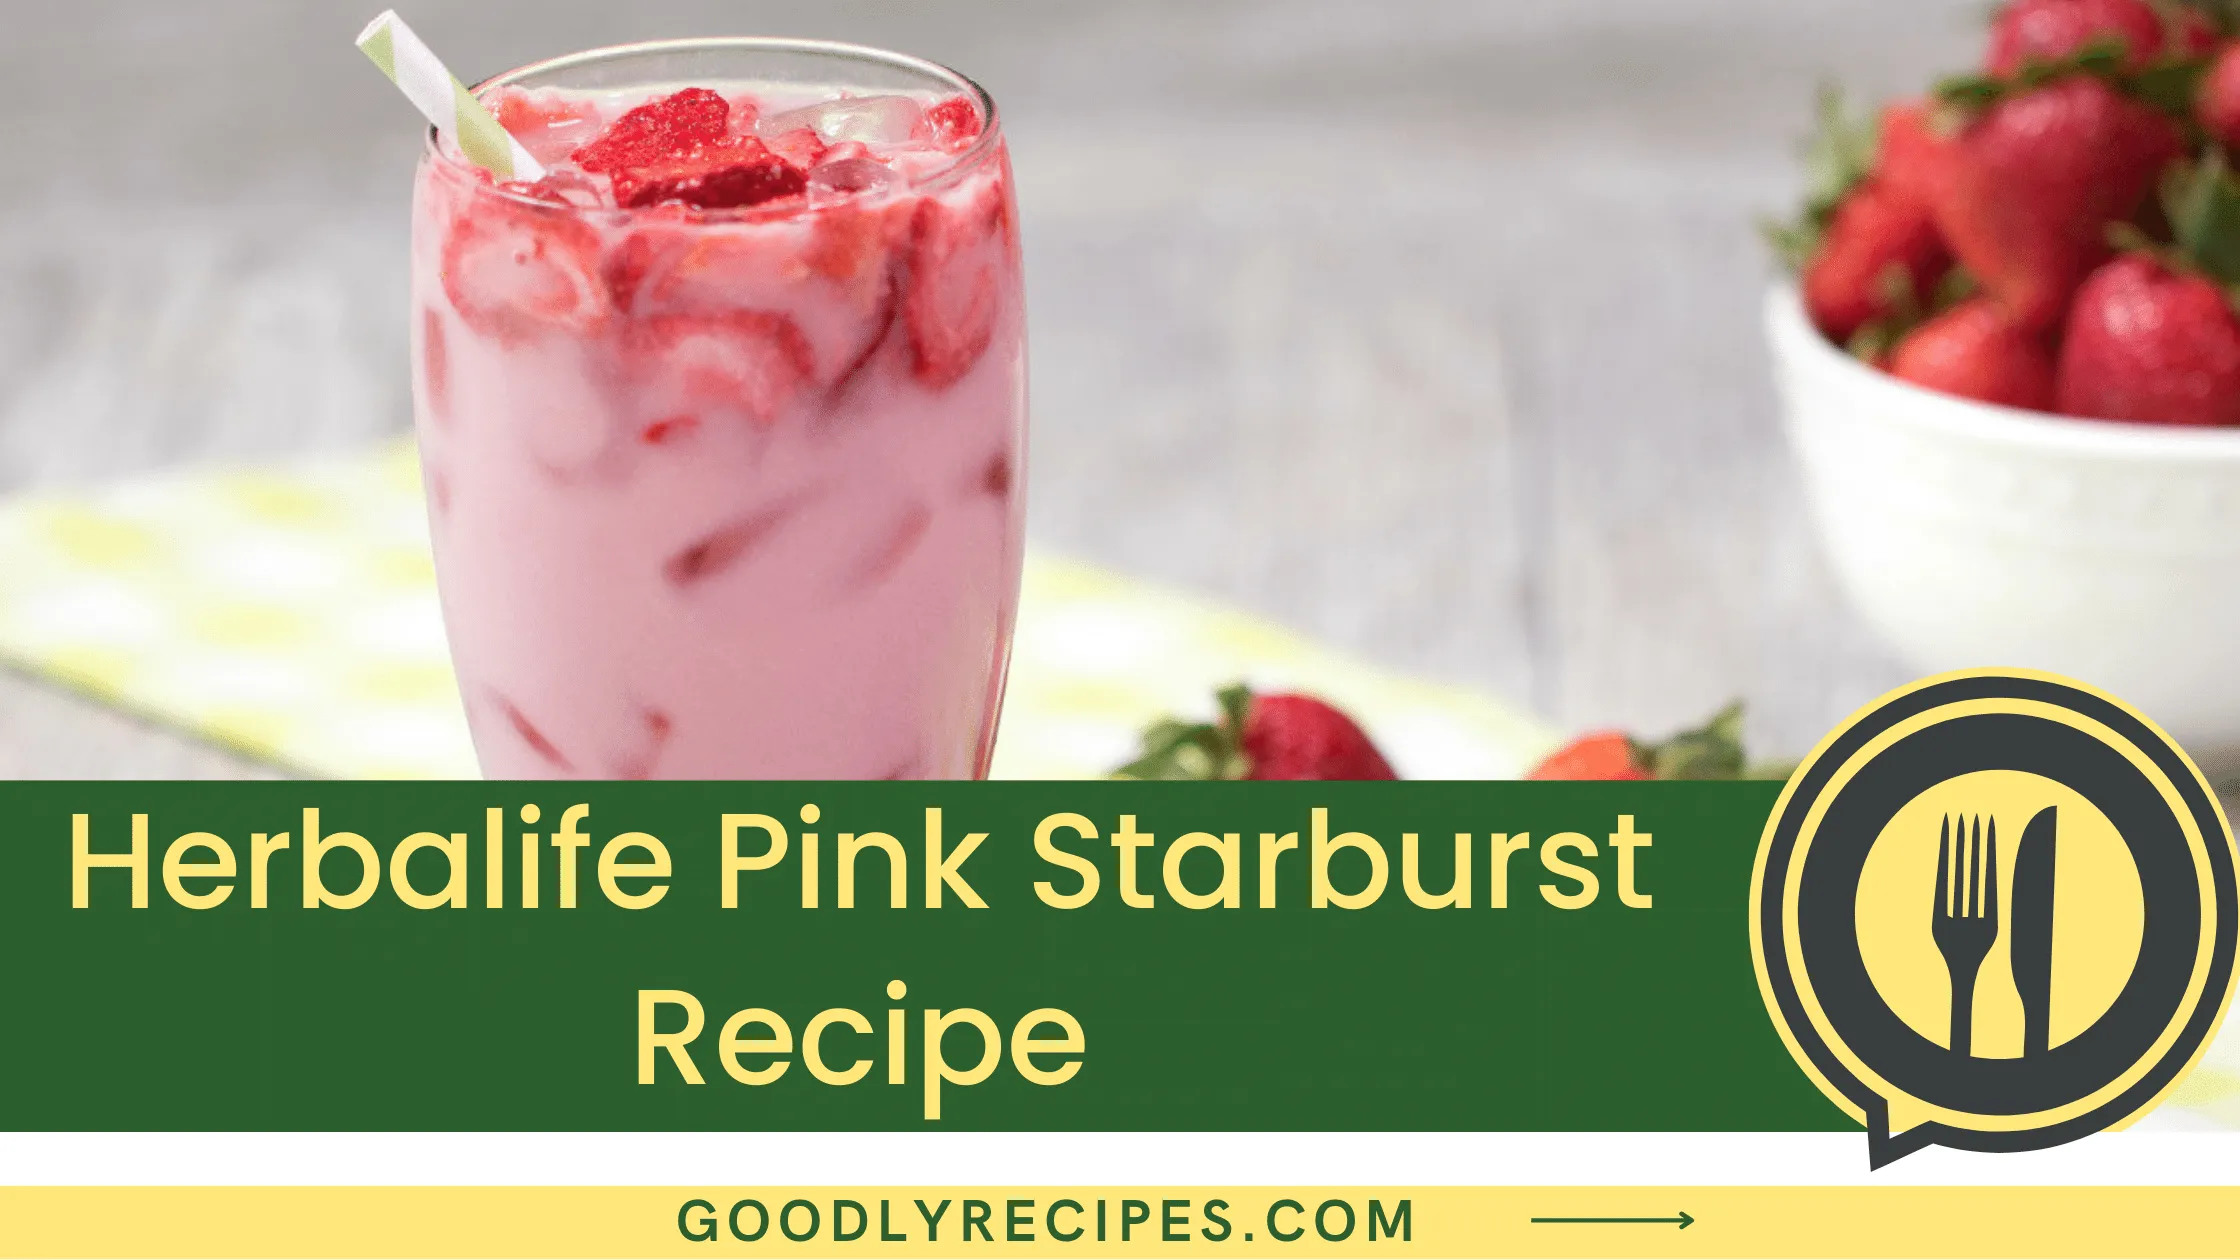 What is Herbalife Pink Starburst?